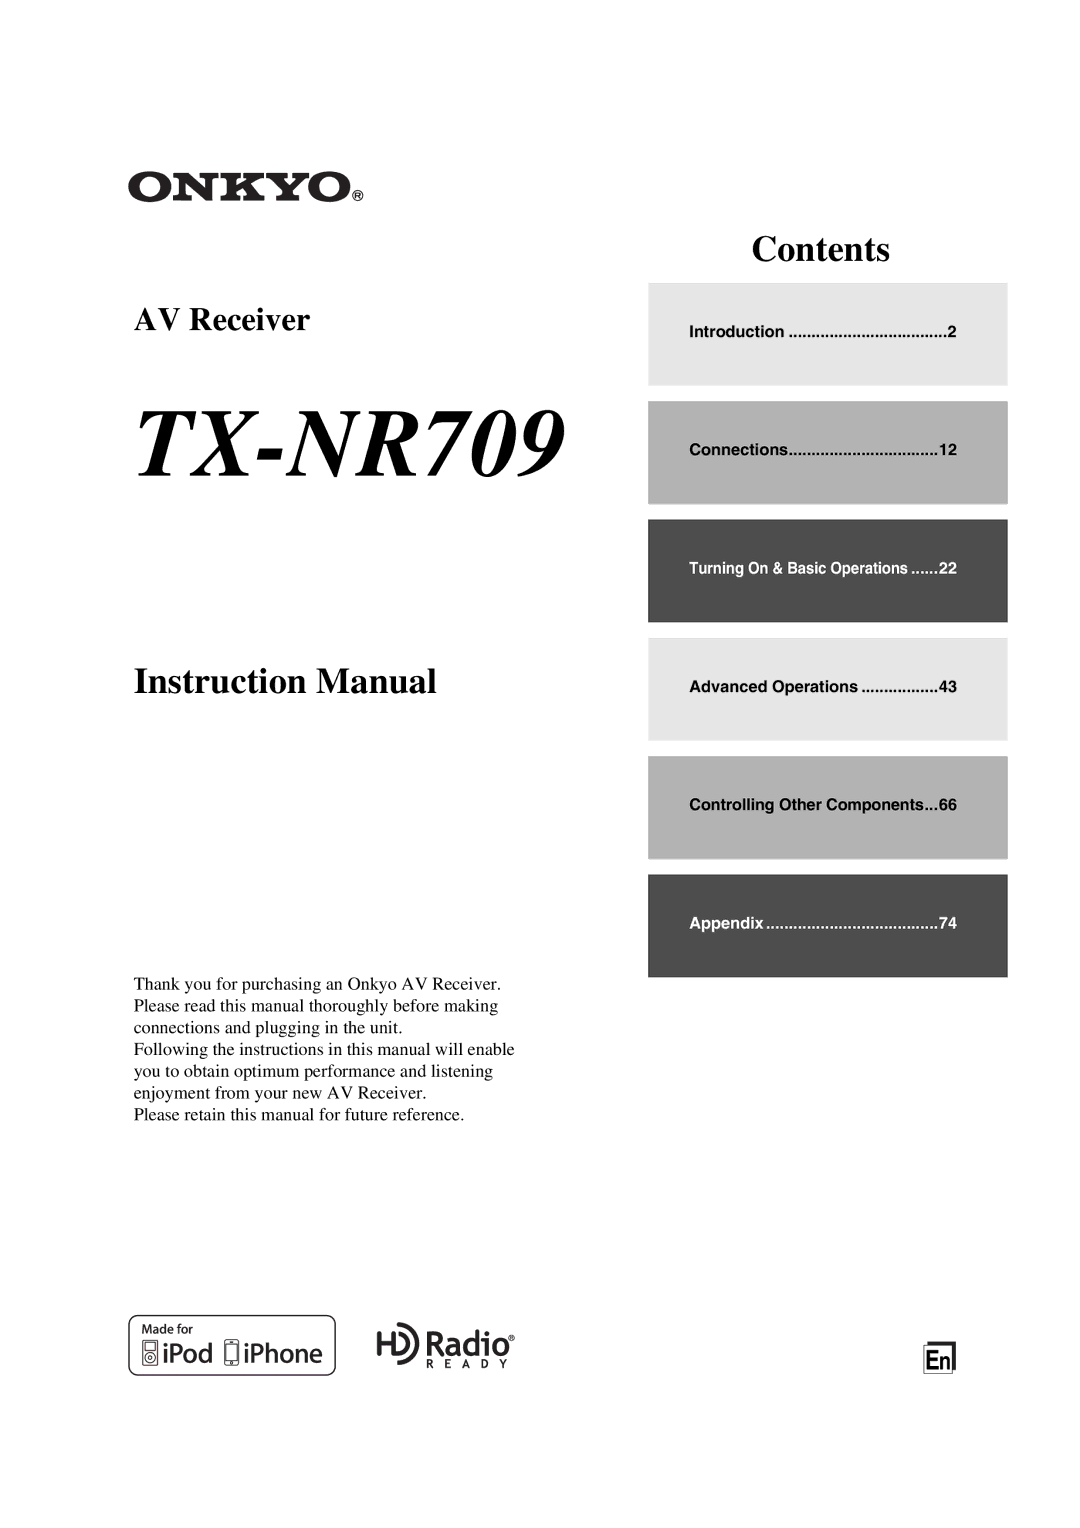 Onkyo TX-NR709 instruction manual 